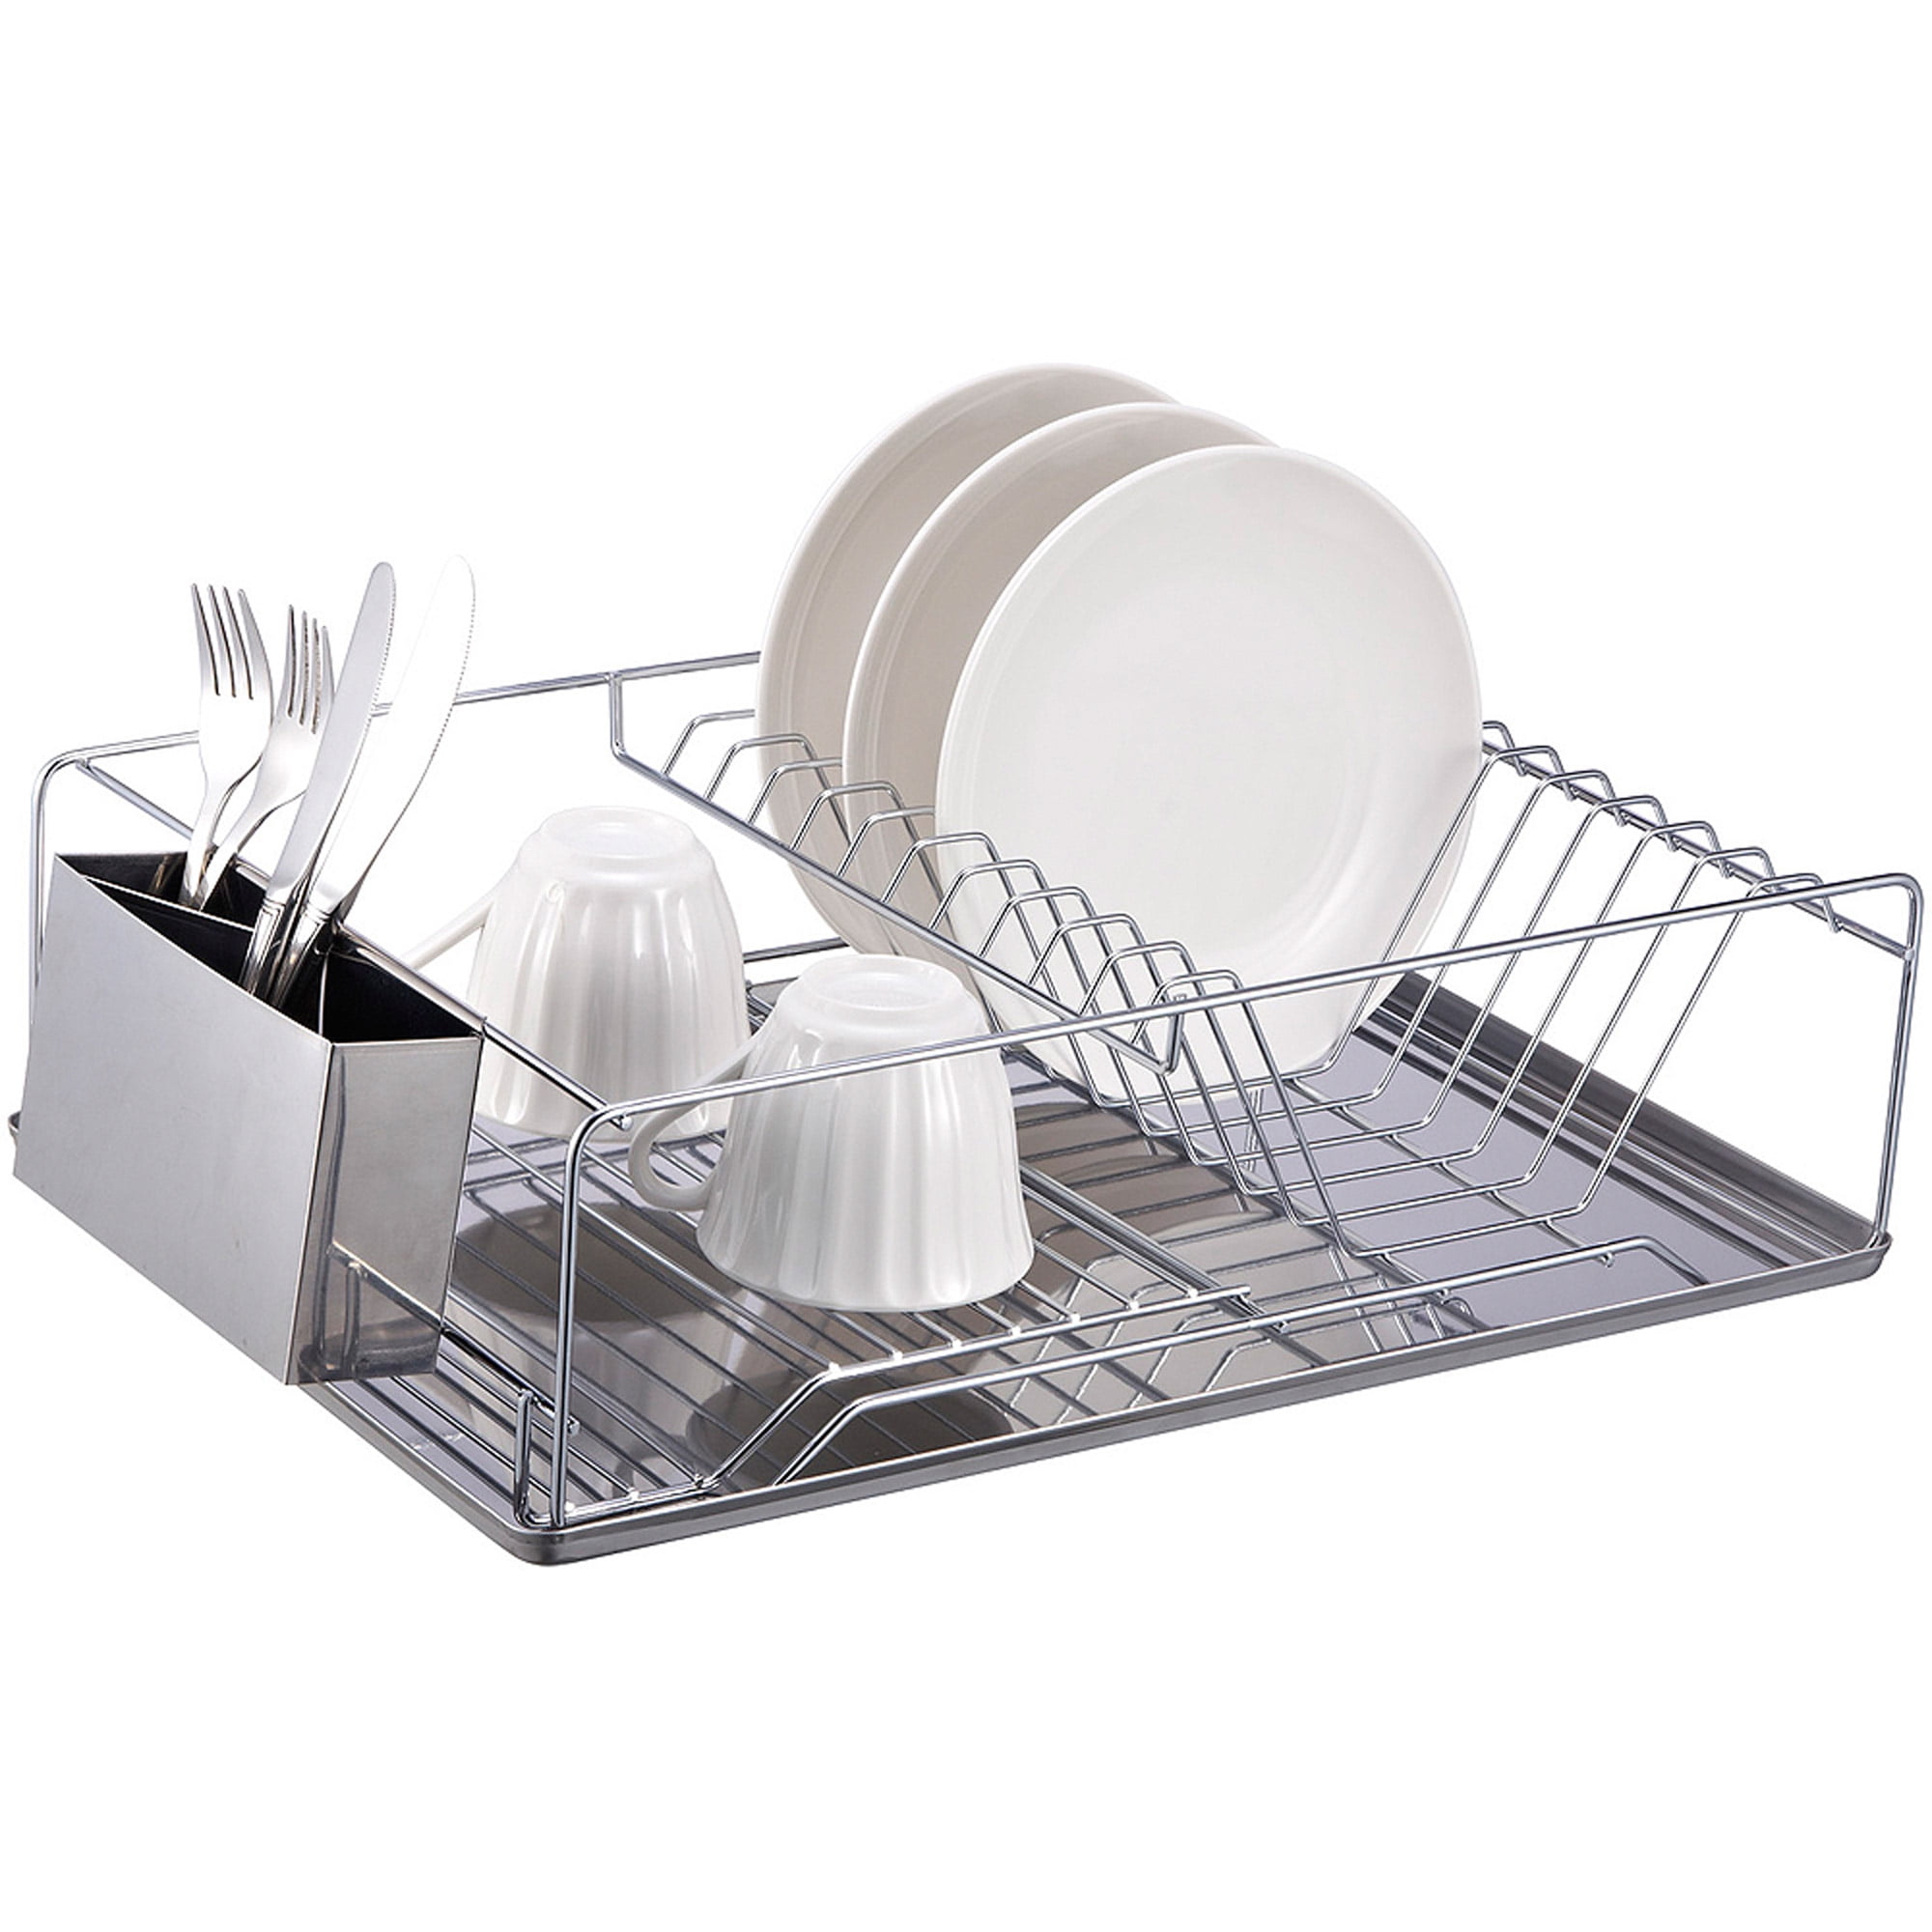 EC _ Plastic Kitchen Dish Drainer Rack Holder Stand Plate 